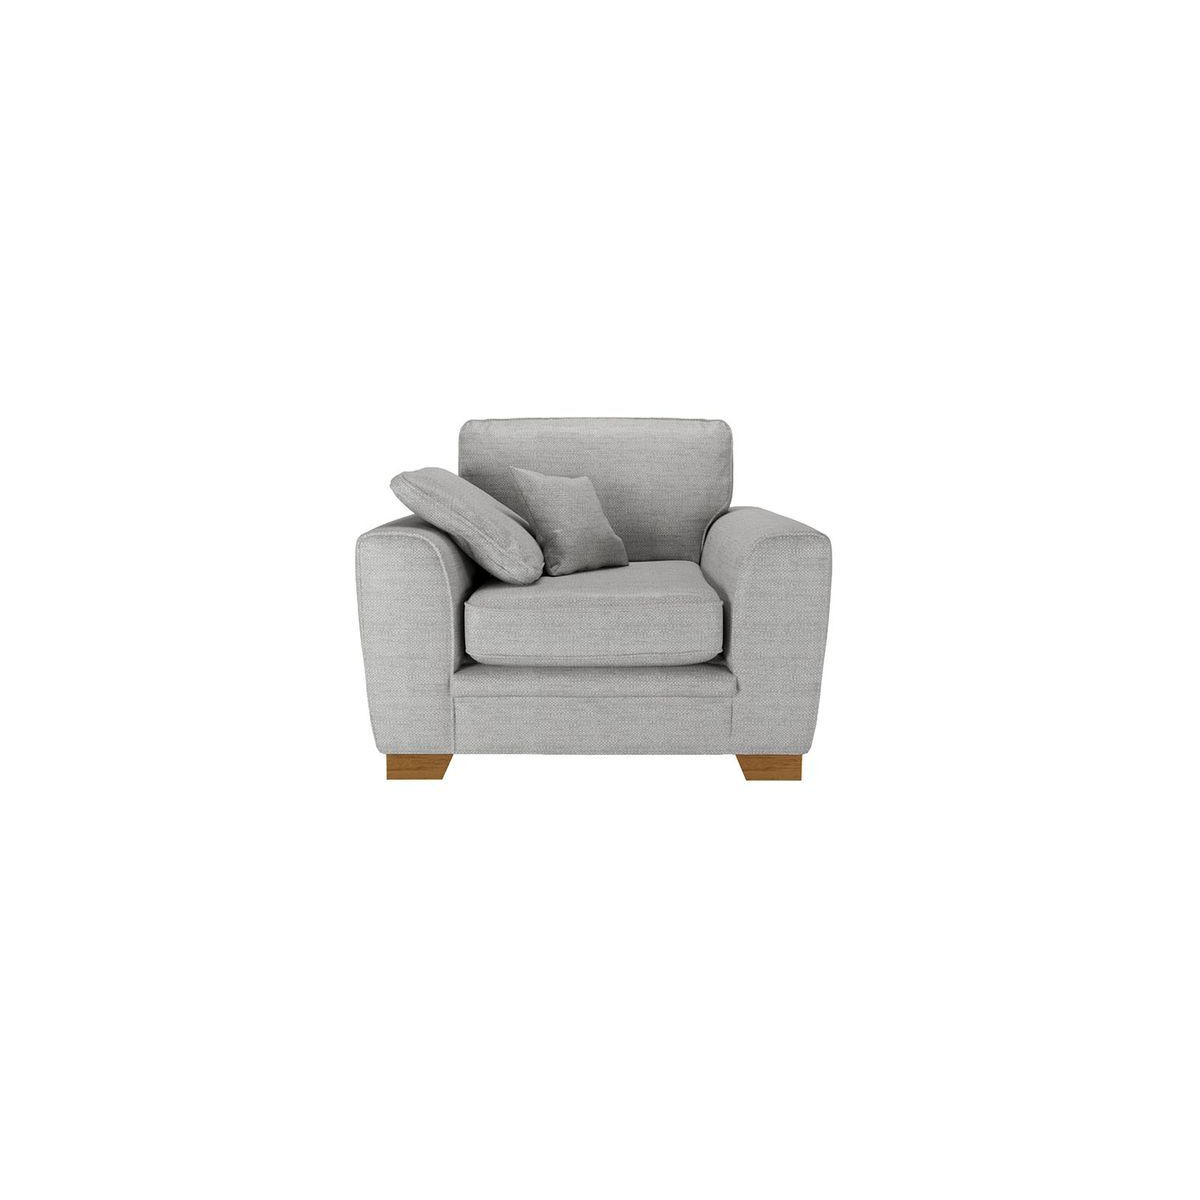 Ronay Armchair, light grey, Leg colour: aveo - image 1